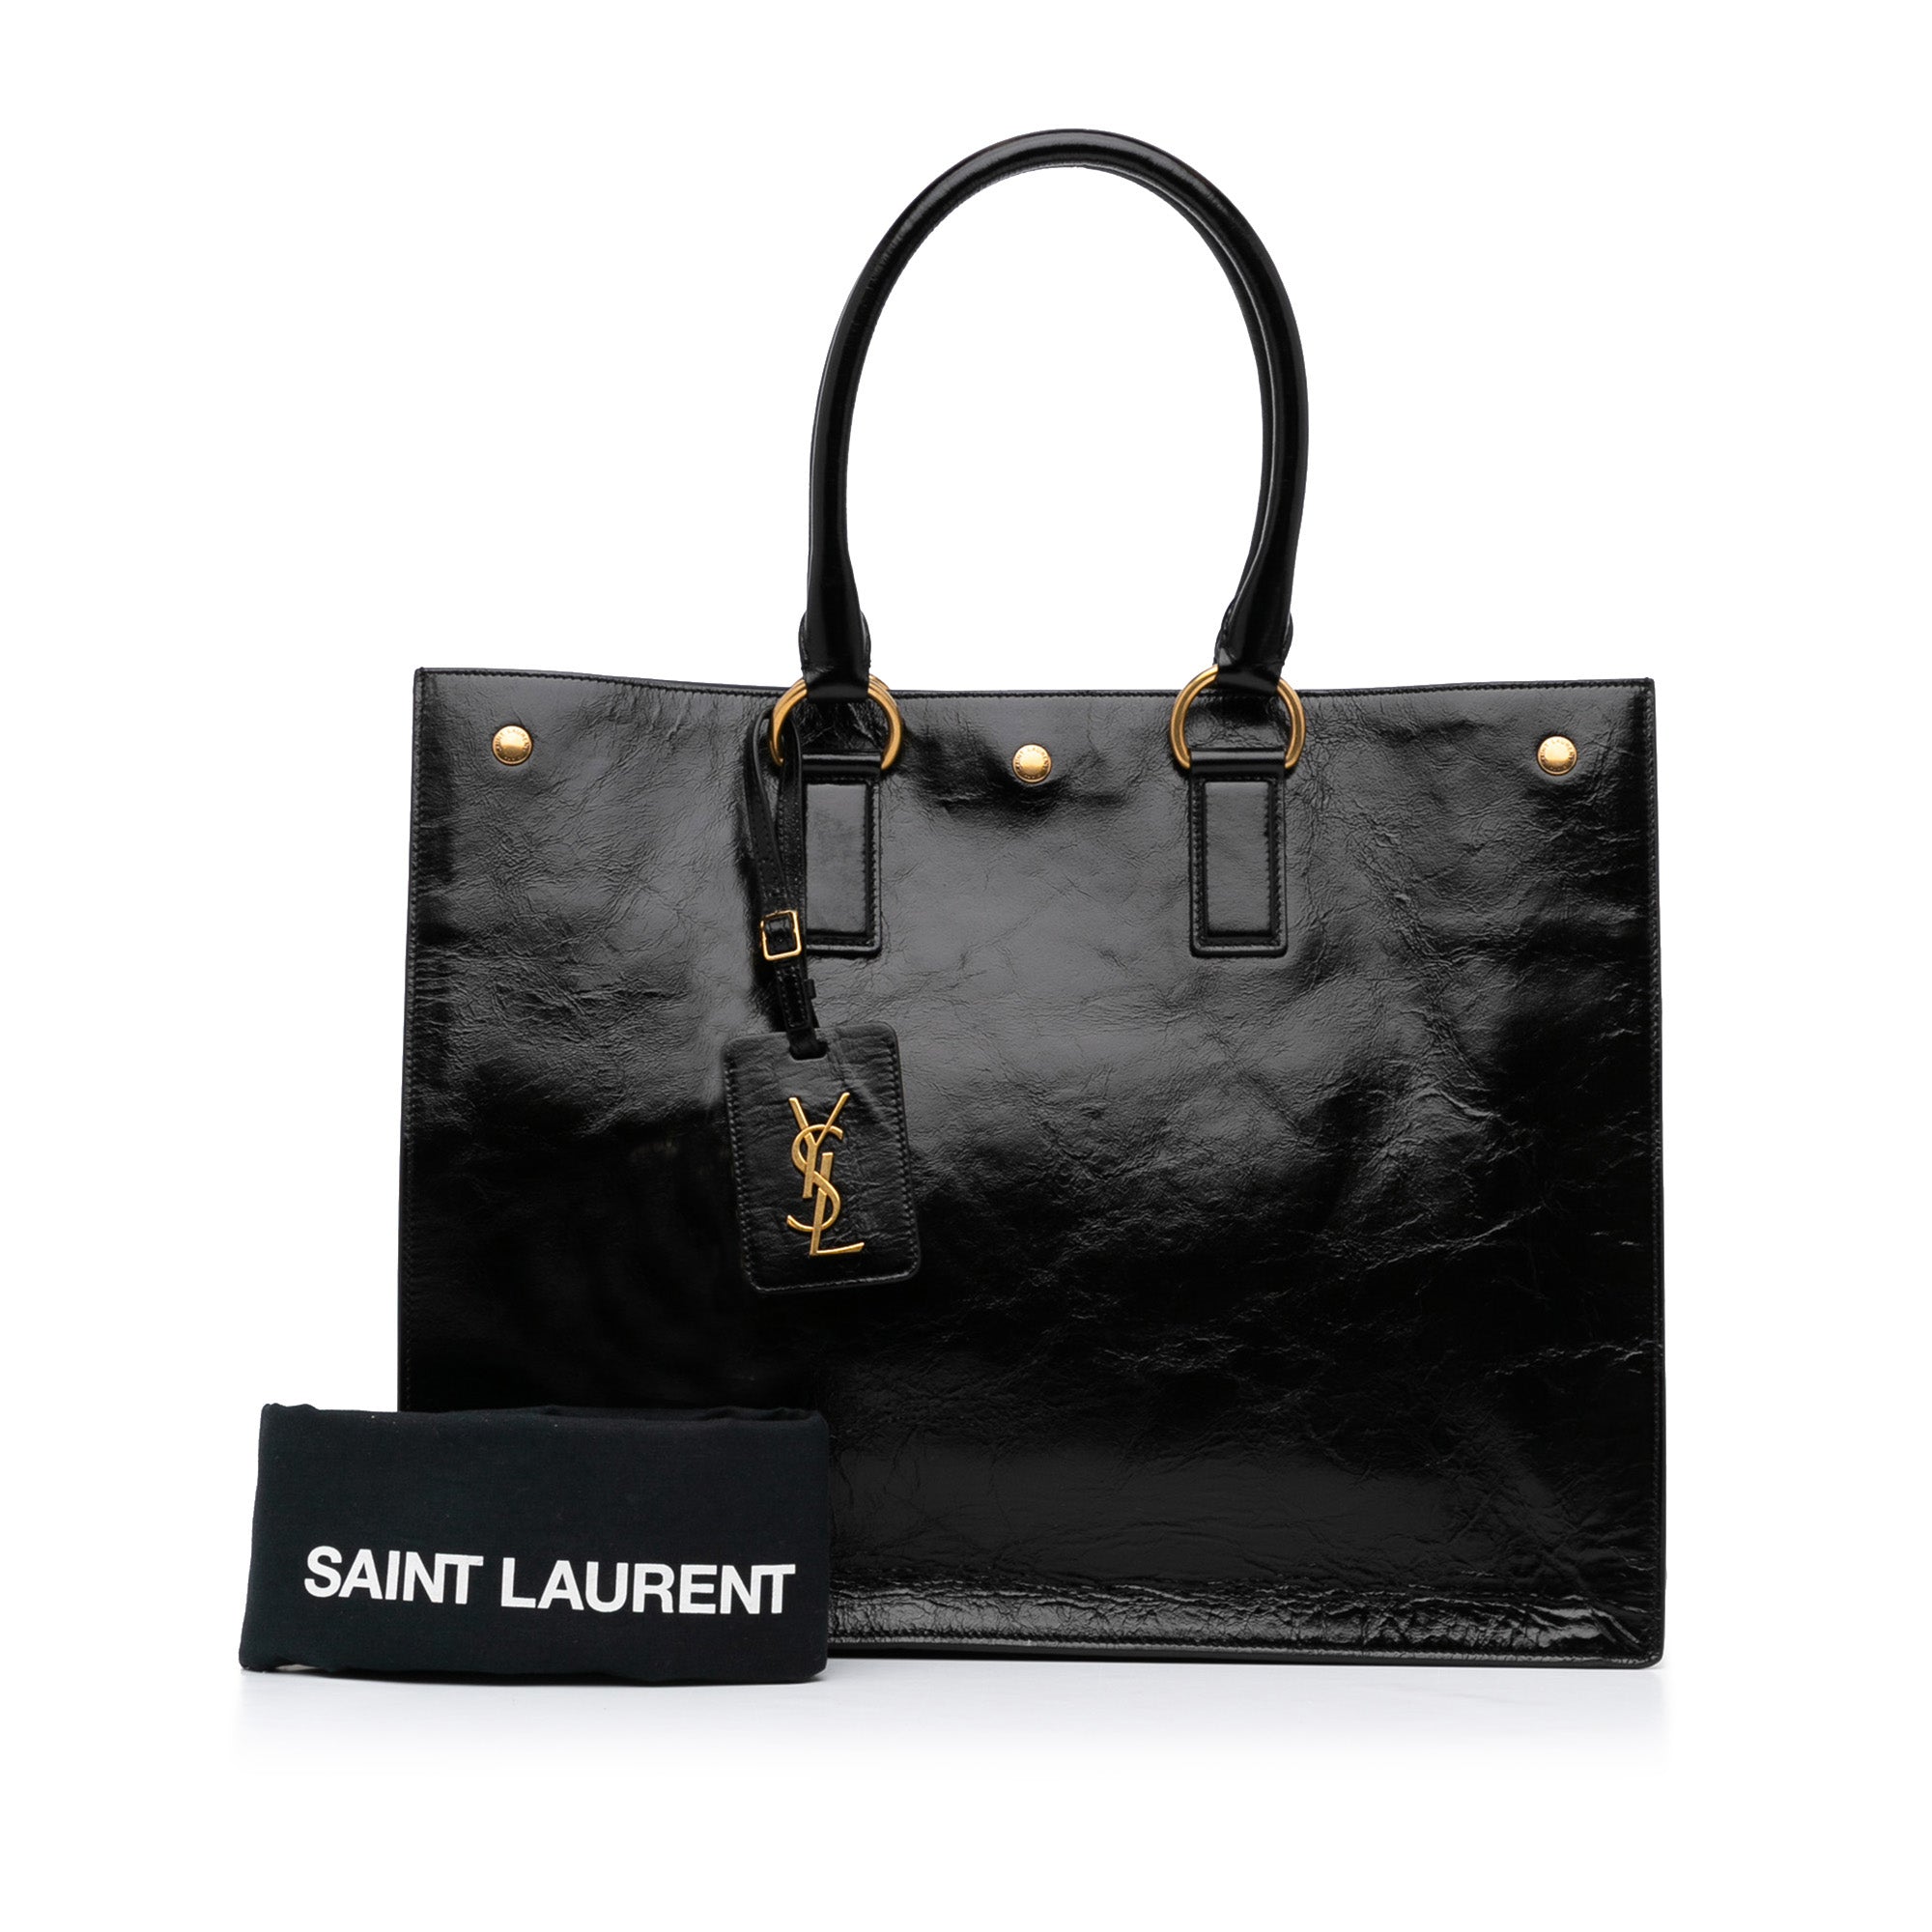 Emporio Armani - Authenticated Handbag - Leather Grey Plain for Women, Never Worn